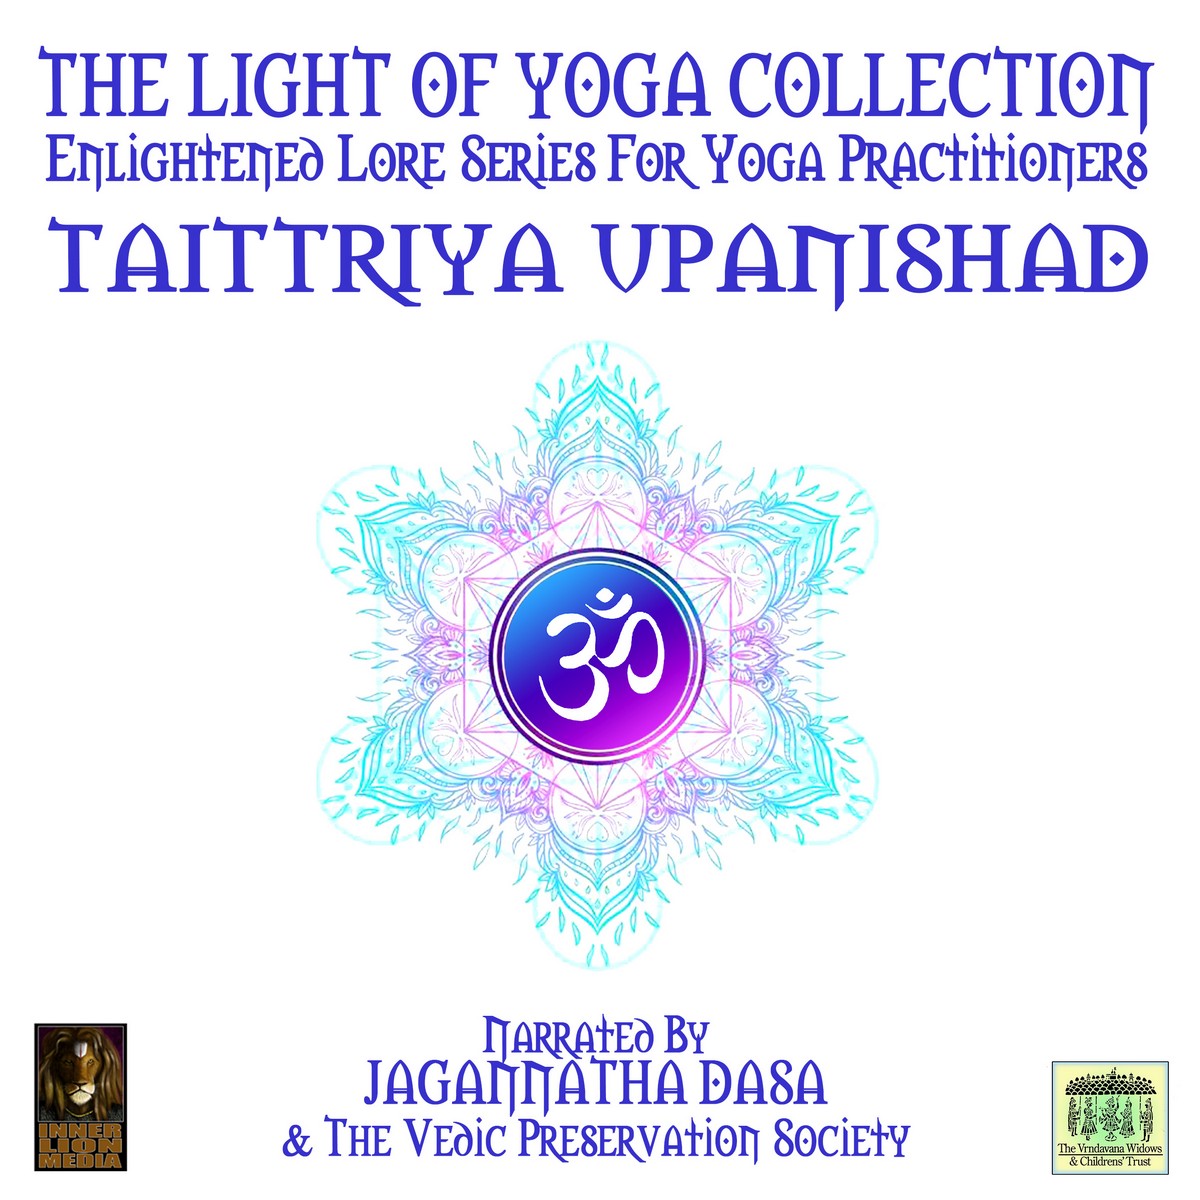 The Light Of Yoga Collection – Taittriya Upanishad